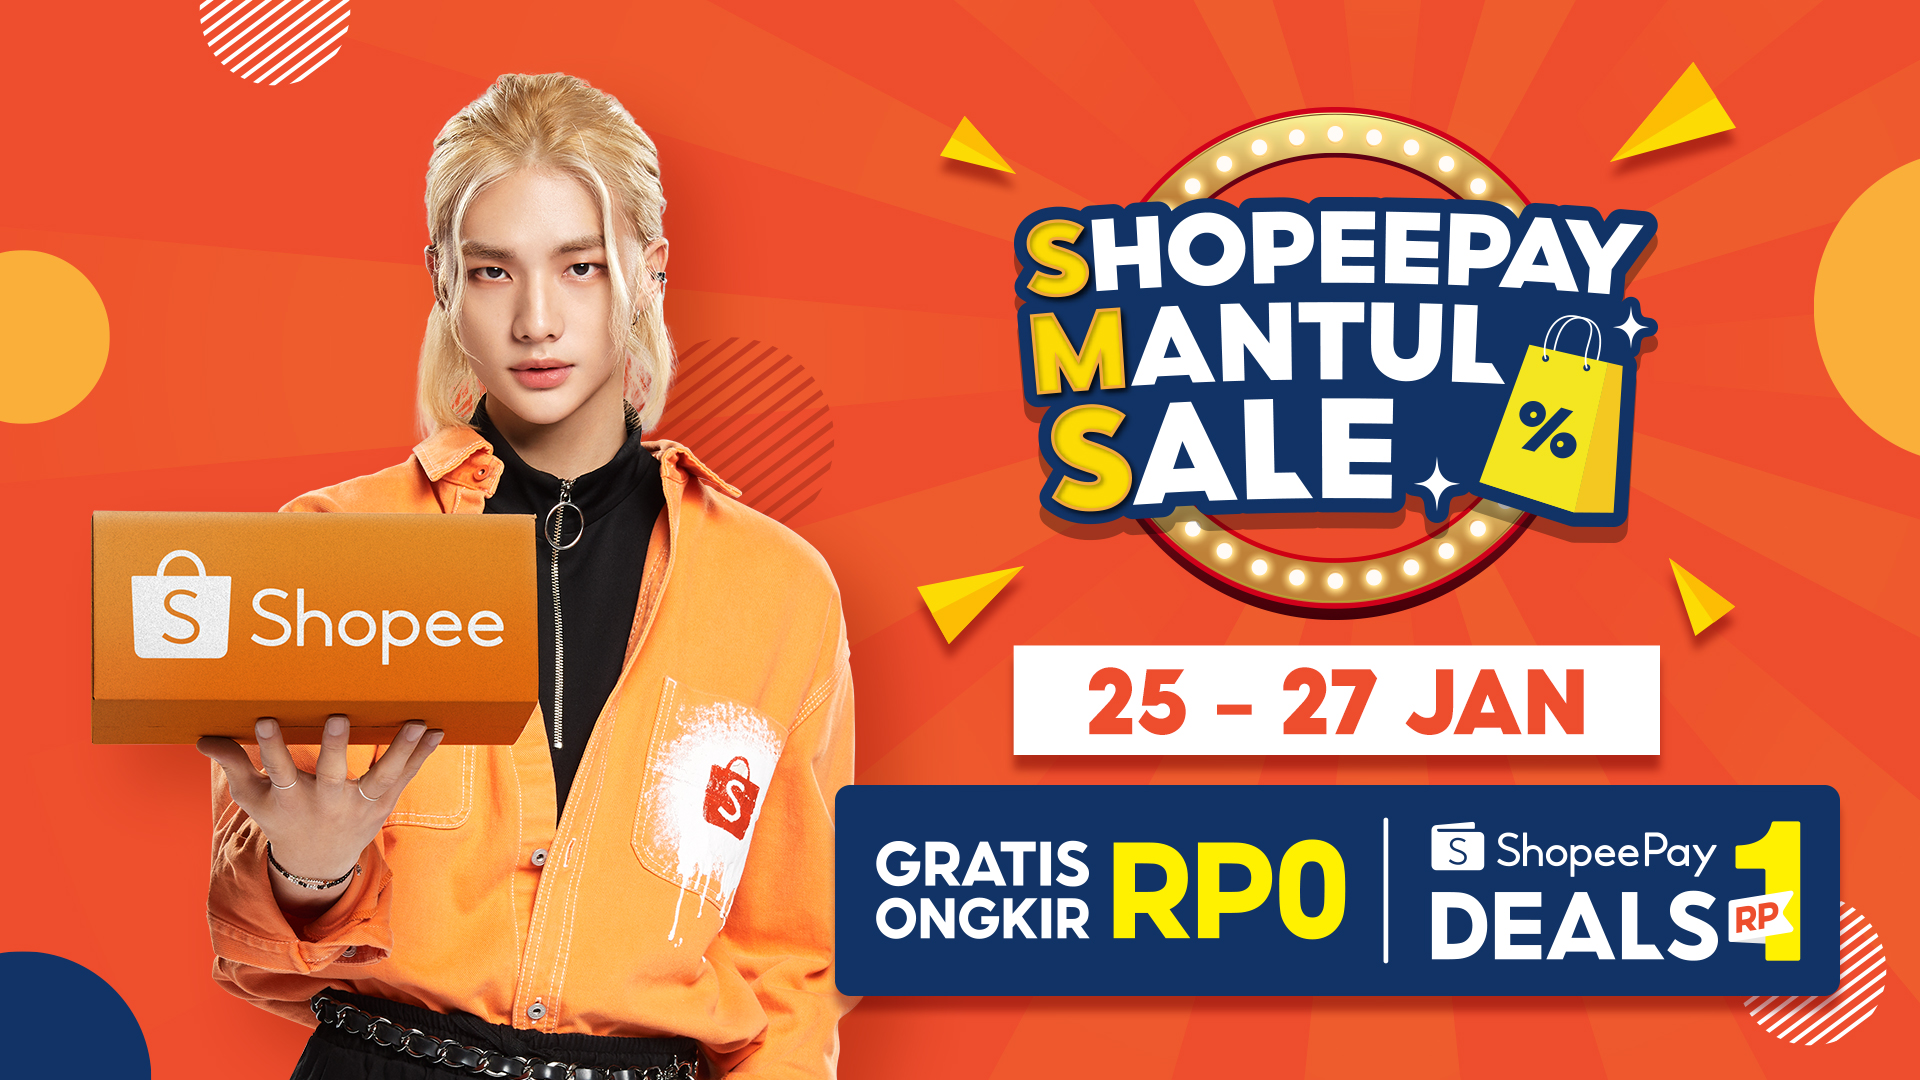 Hadir Tiap Bulan, ShopeePay Mantul Sale (SMS) Tawarkan Gratis Ongkir Rp0 dan ShopeePay Deals Rp1!